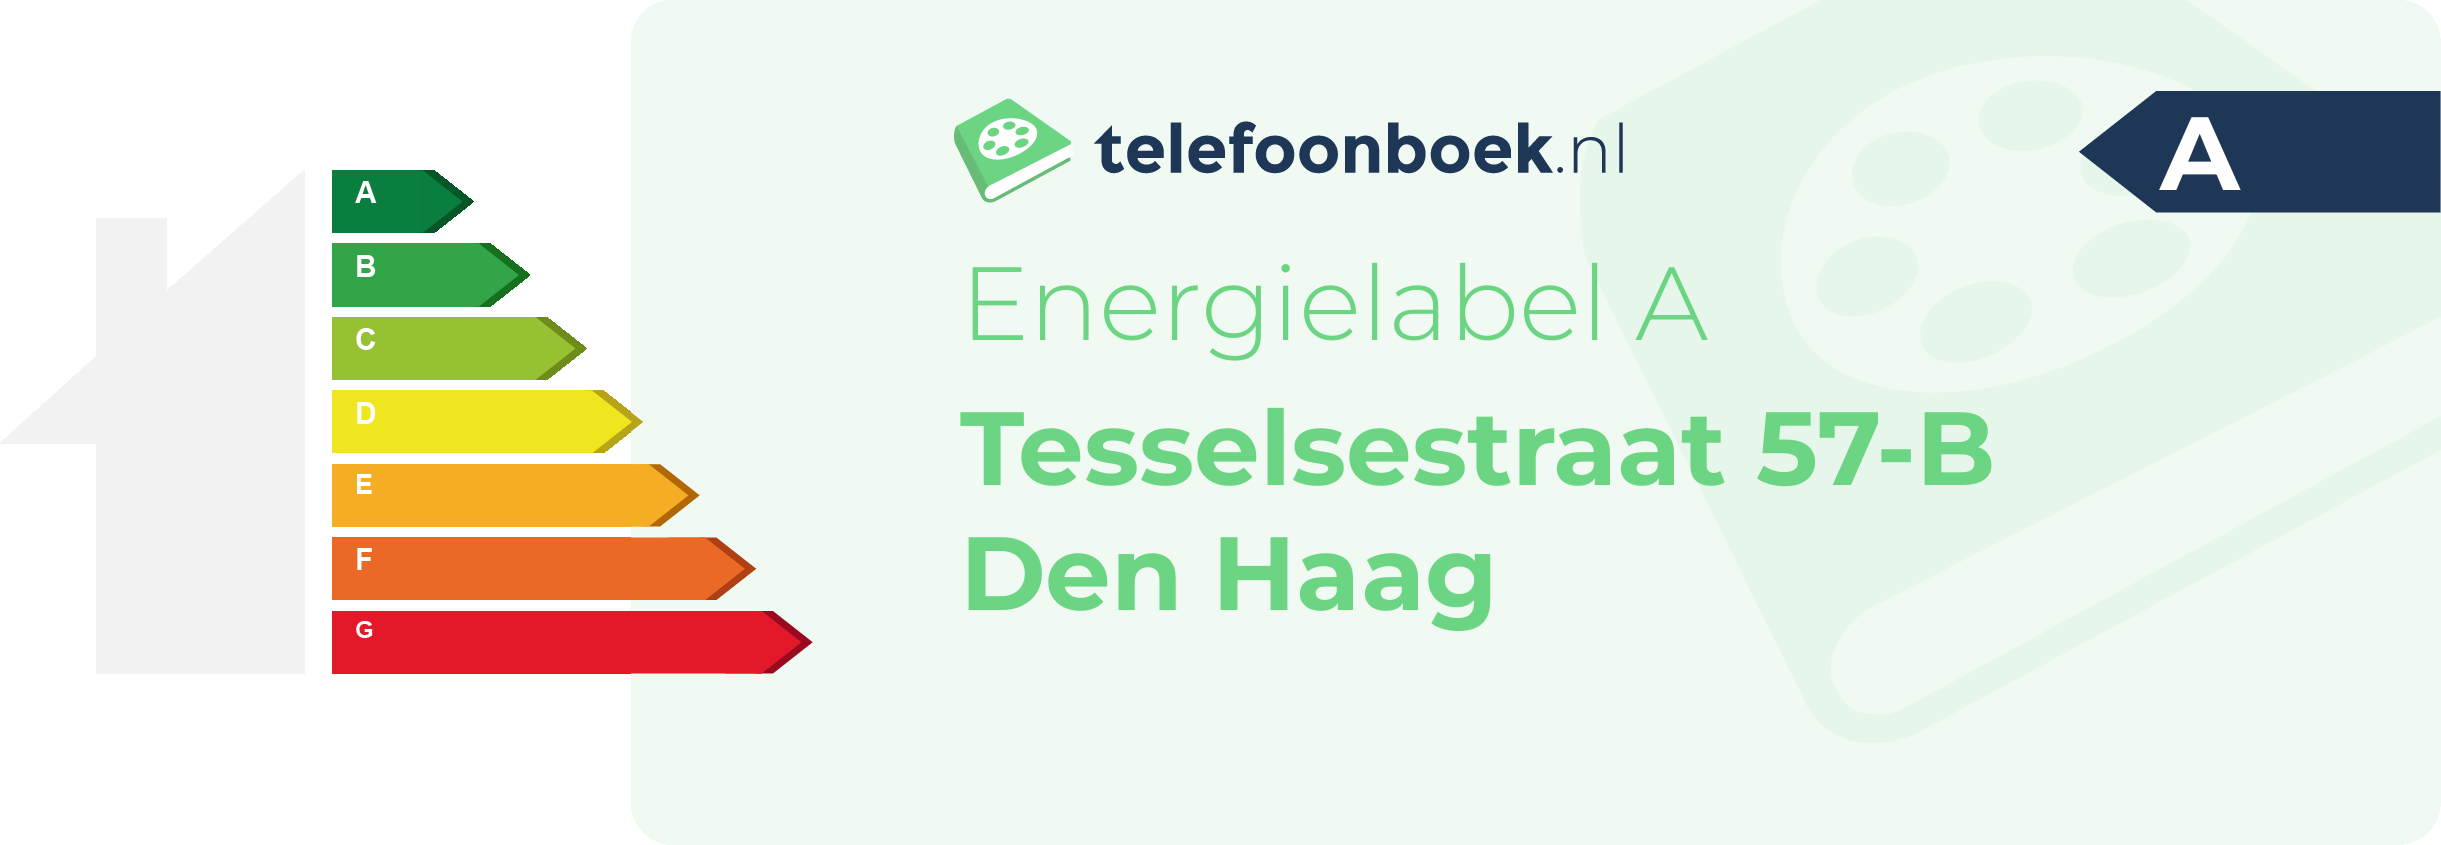 Energielabel Tesselsestraat 57-B Den Haag